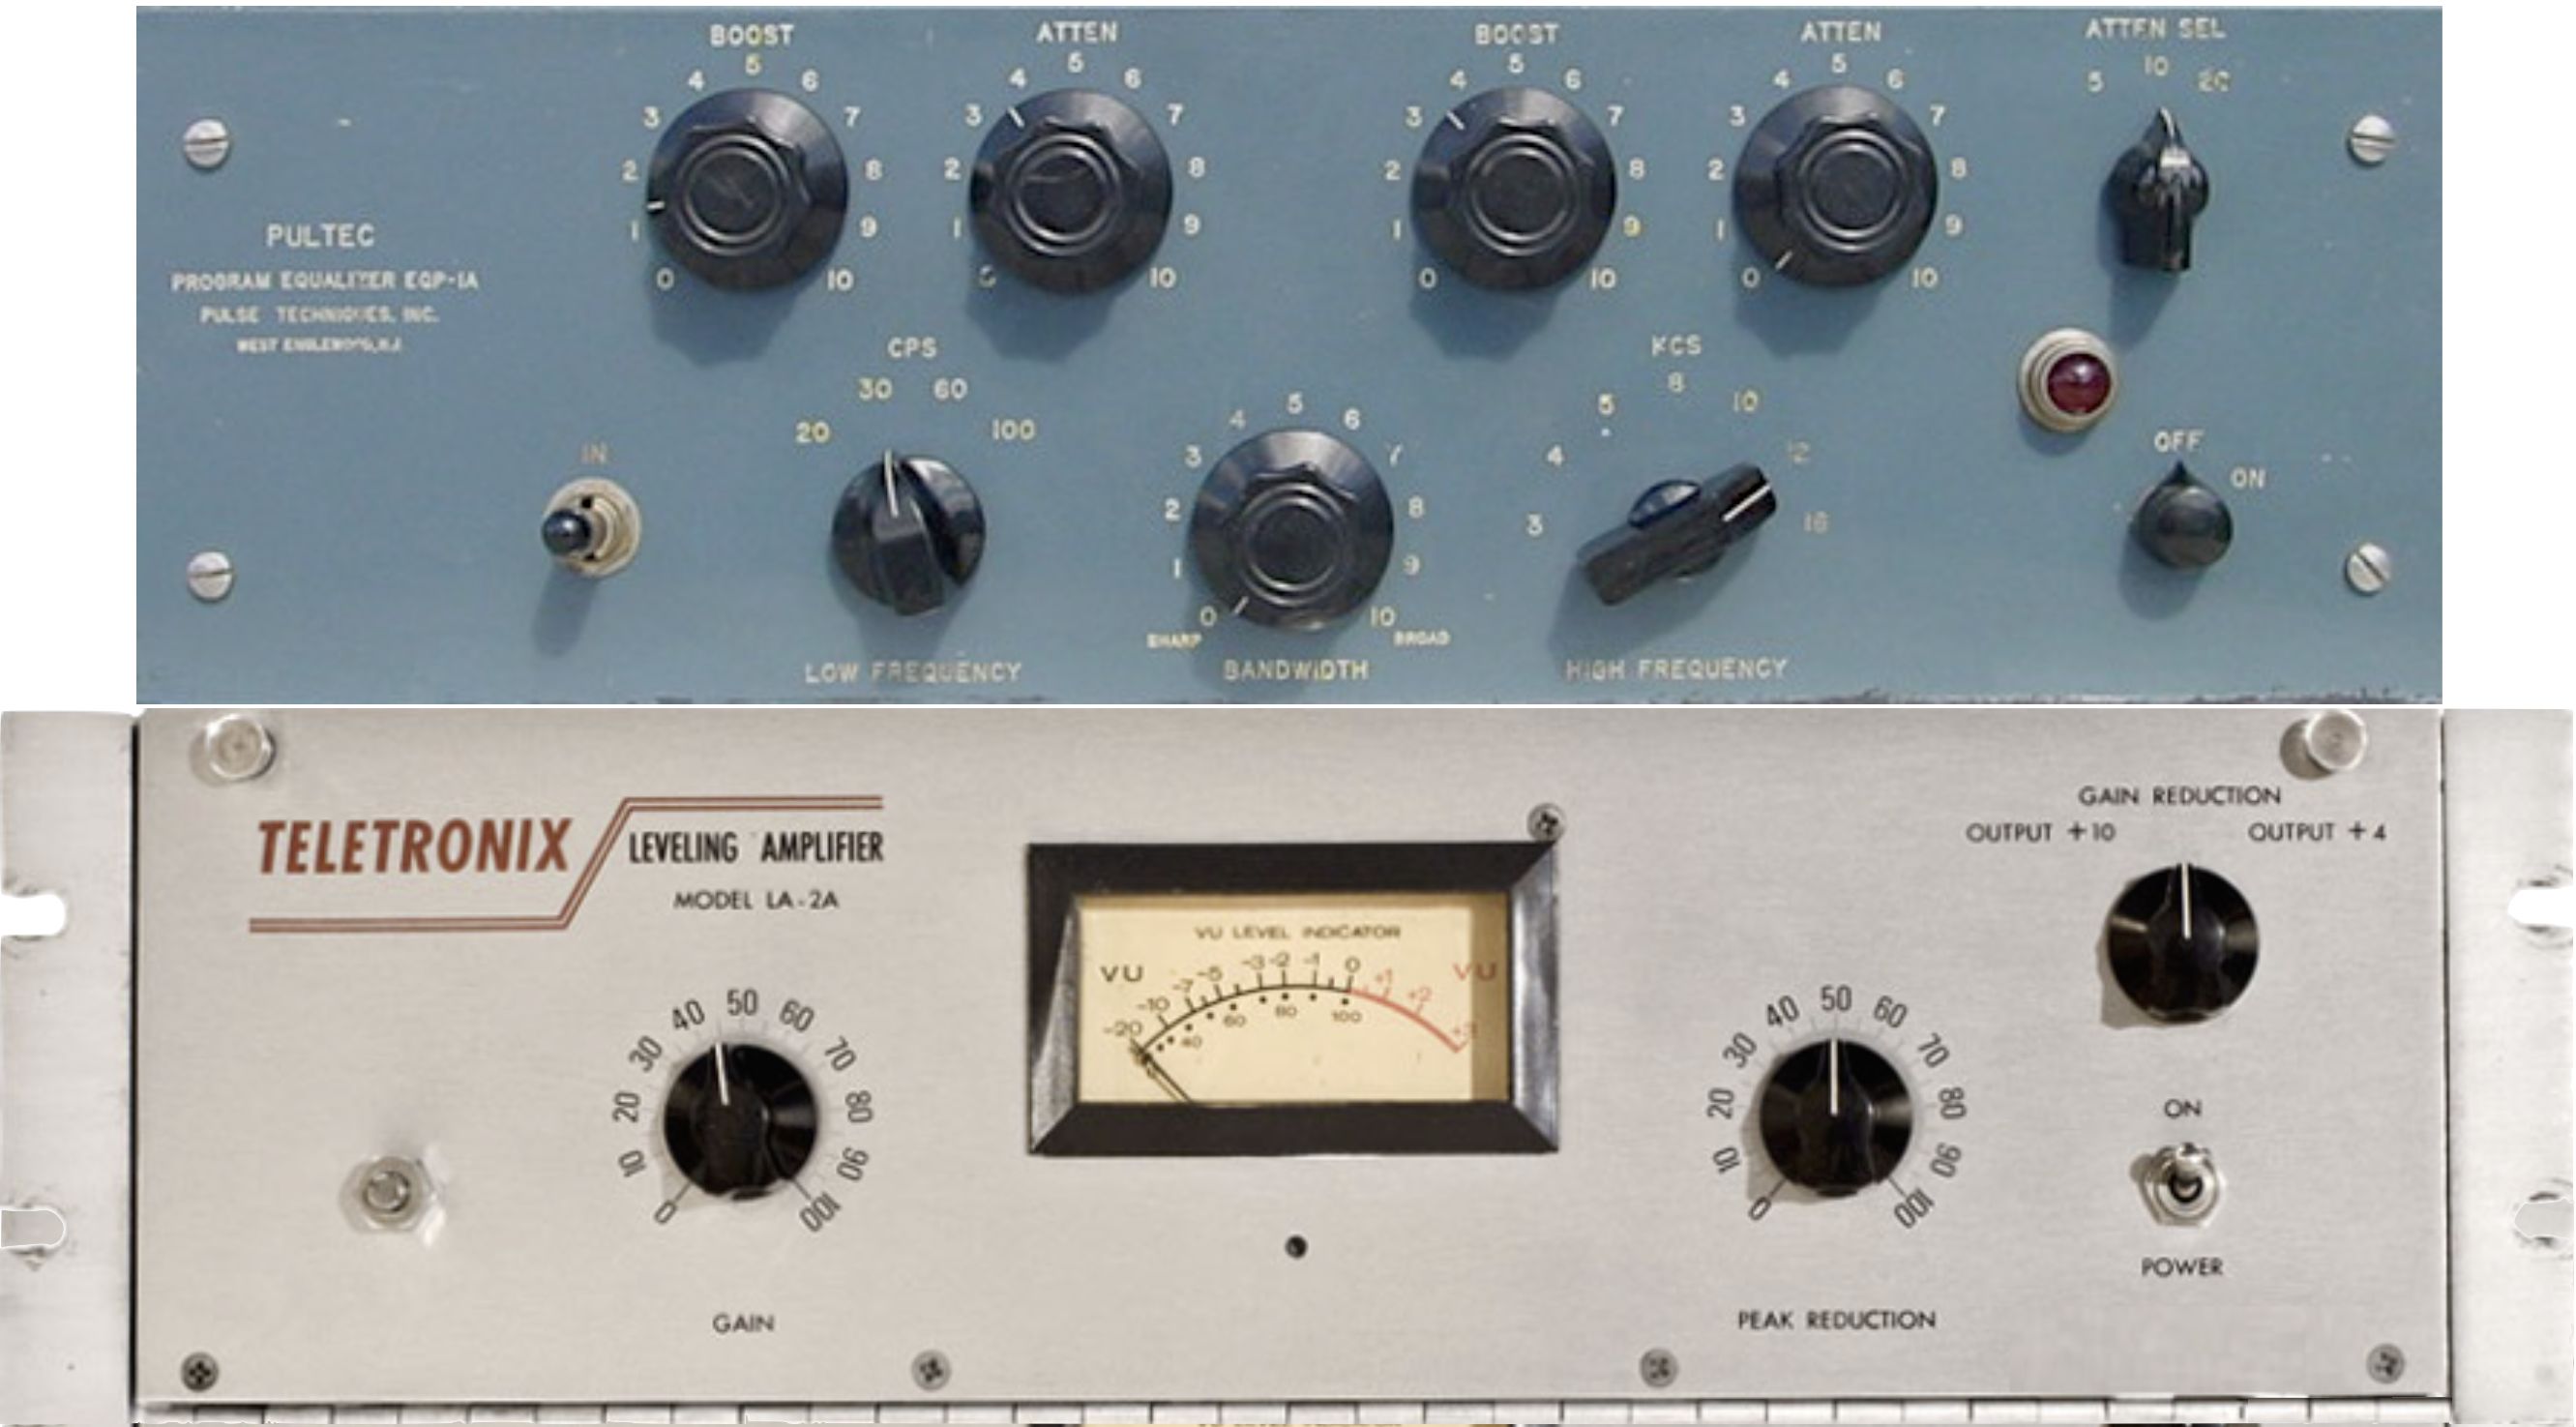 universal audio plugins vs analog hardware